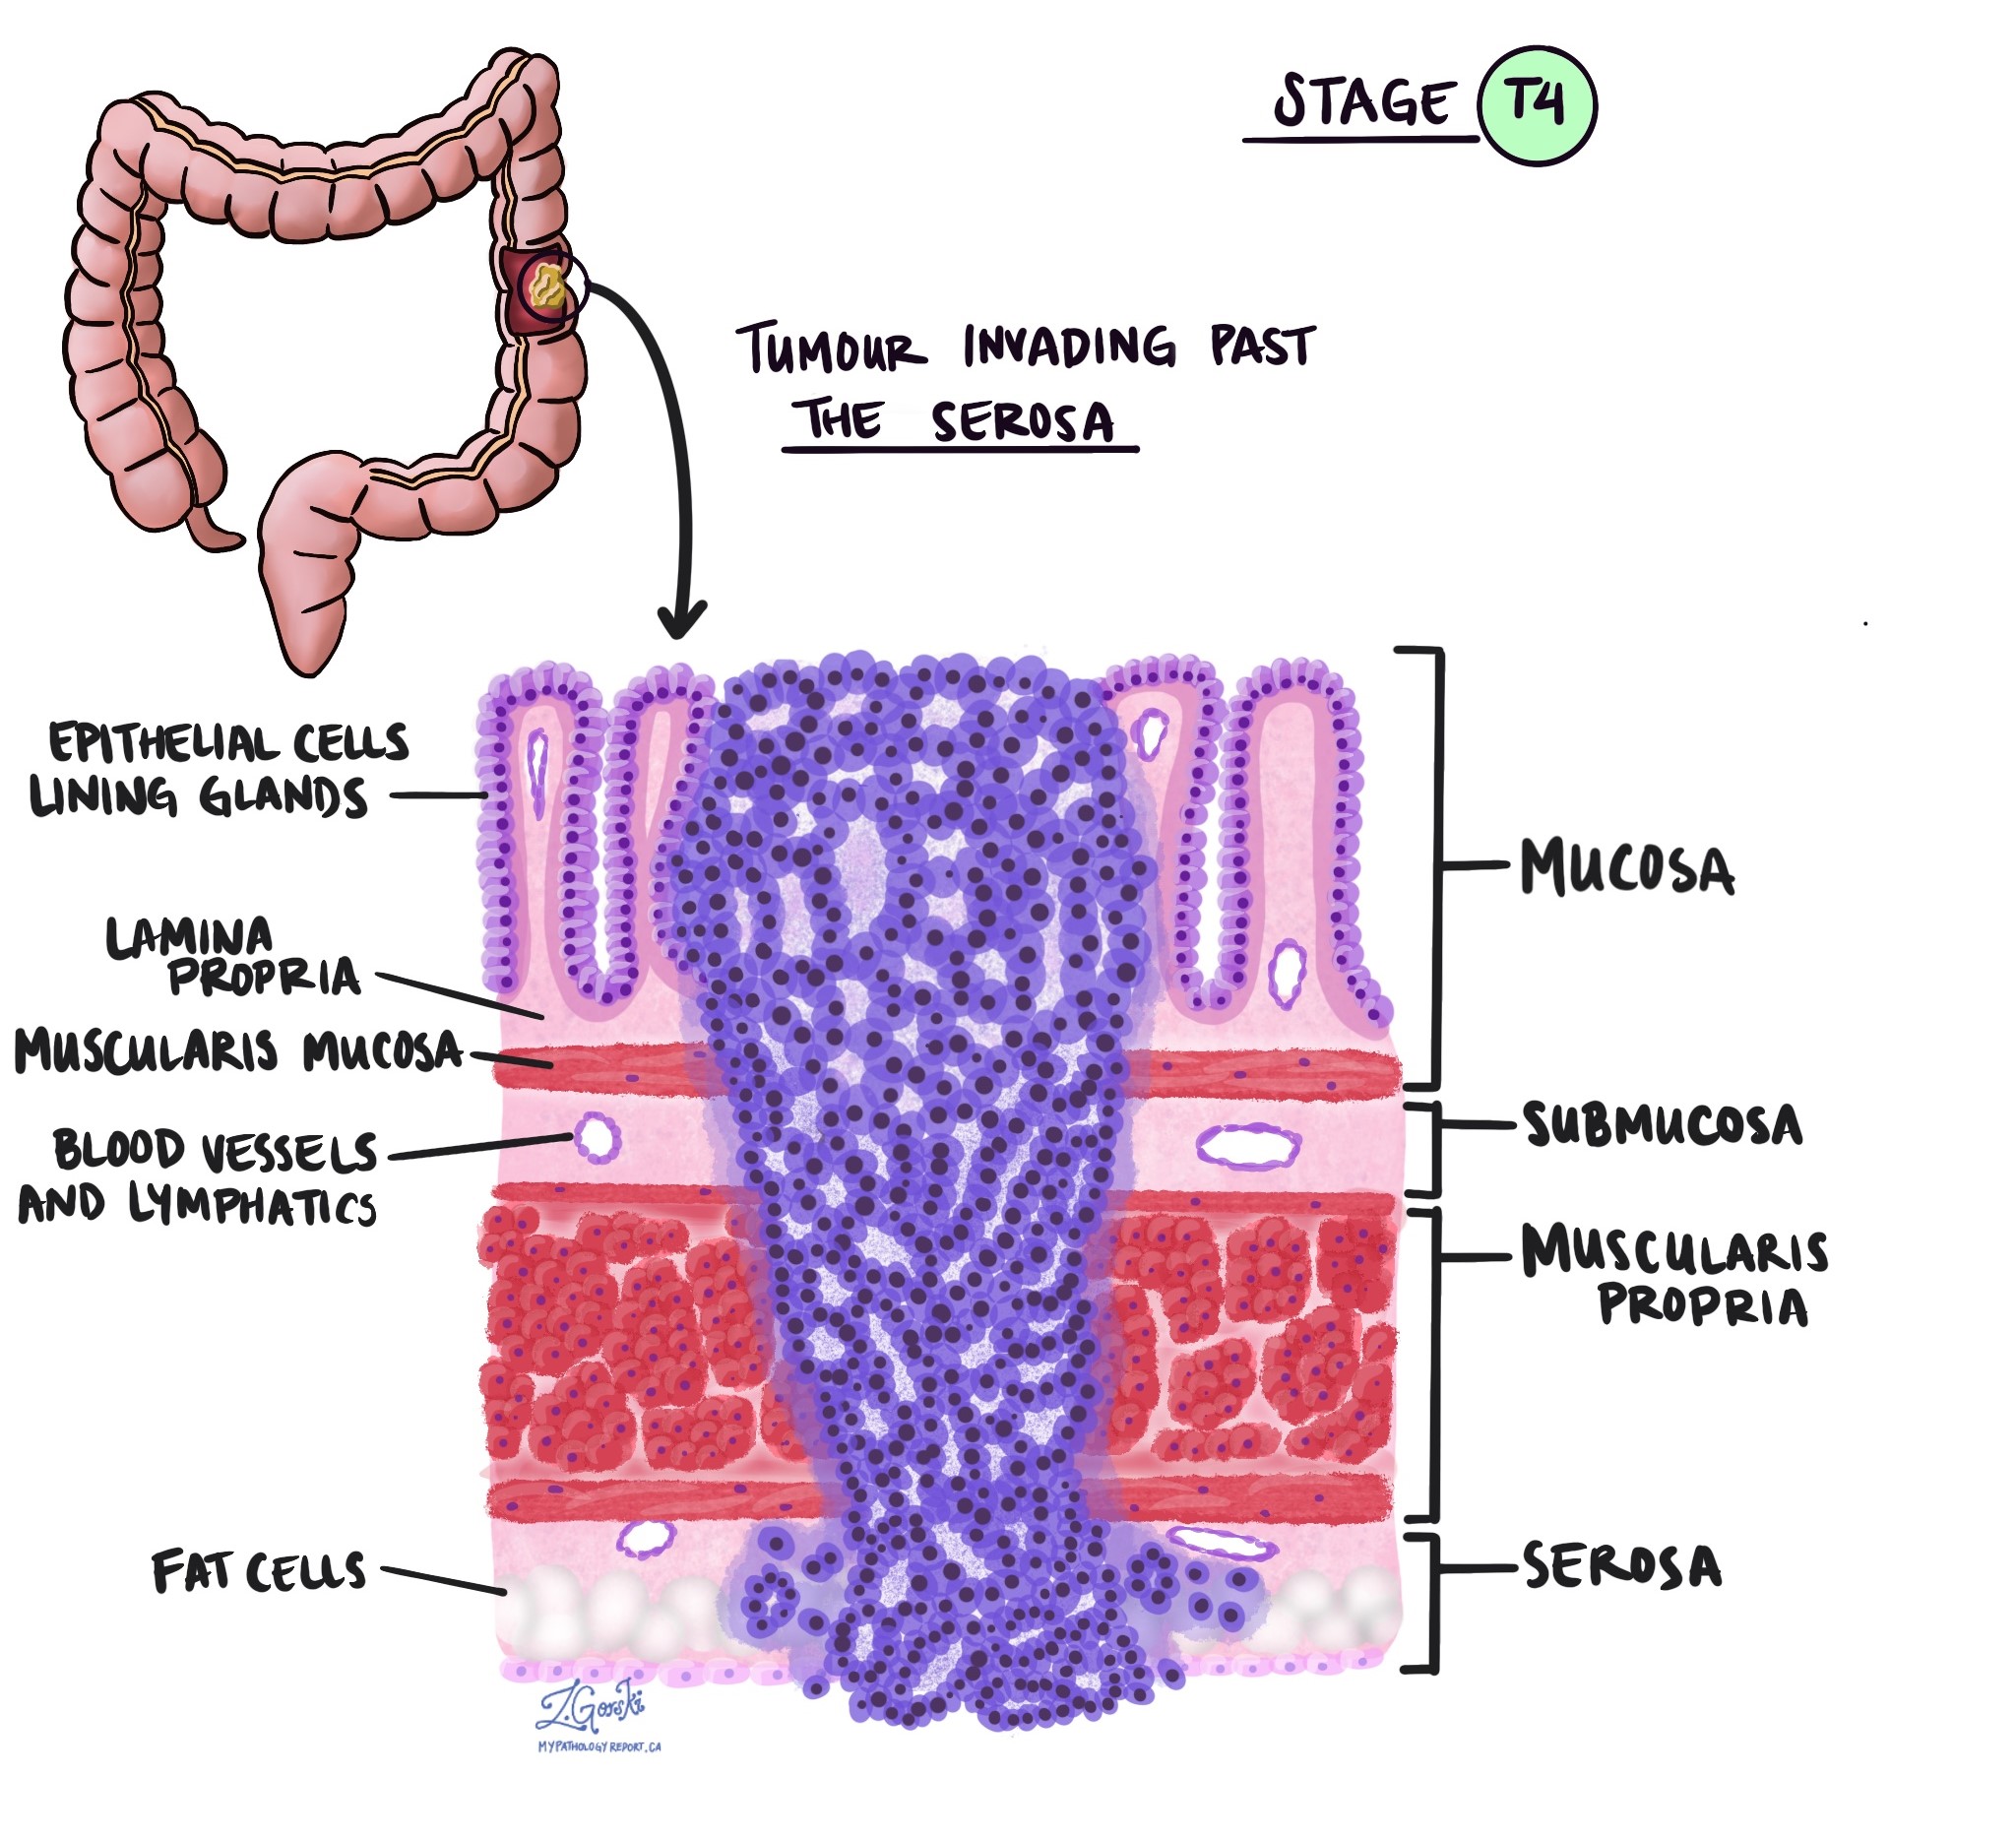 Adenocarcinoma of the colon pathologic tumour stage T4